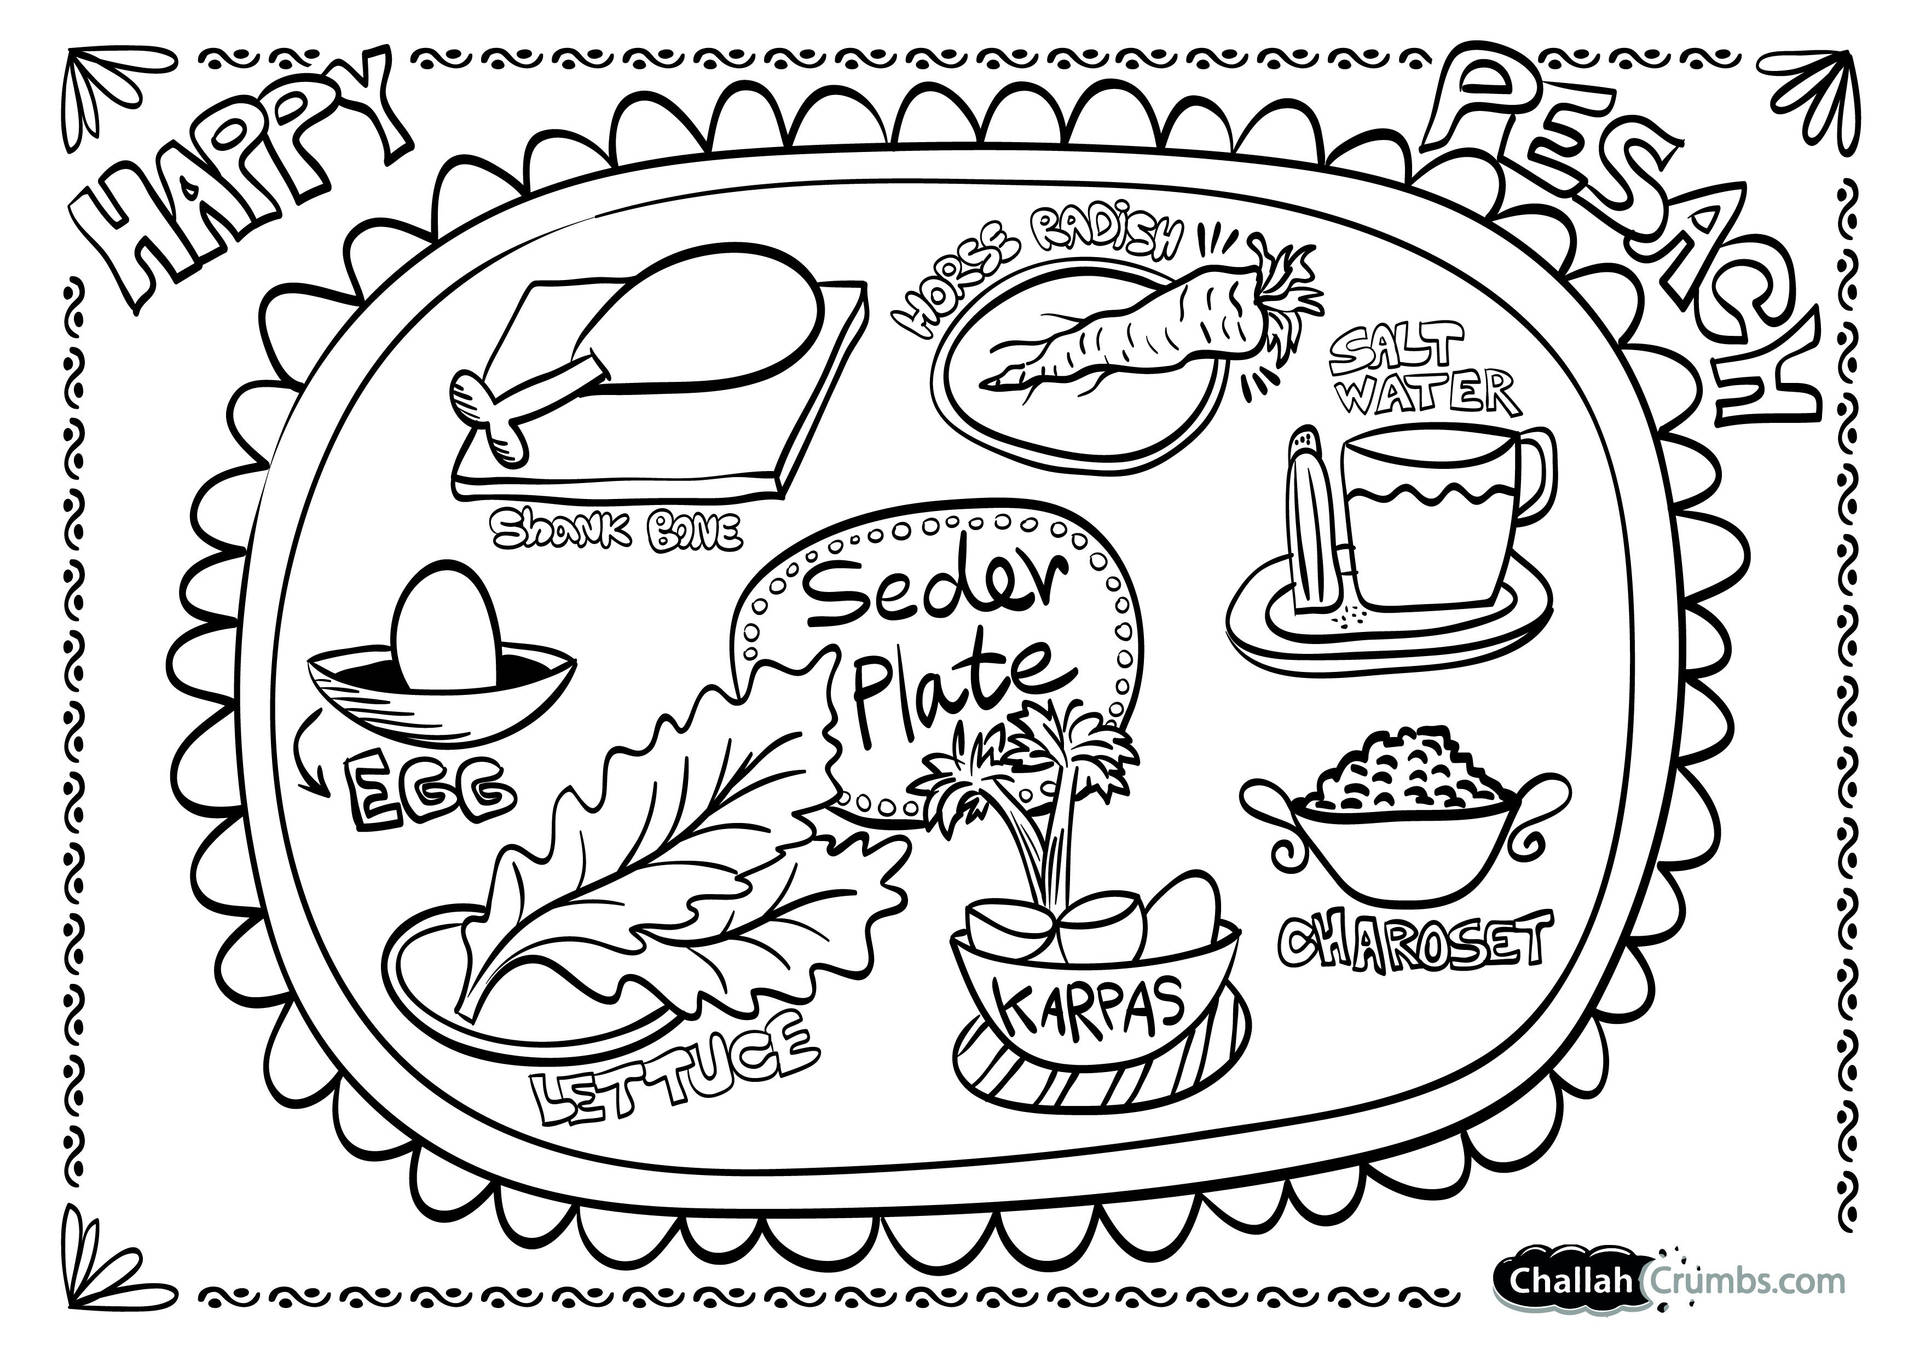 Passover Seder Plate Art Background